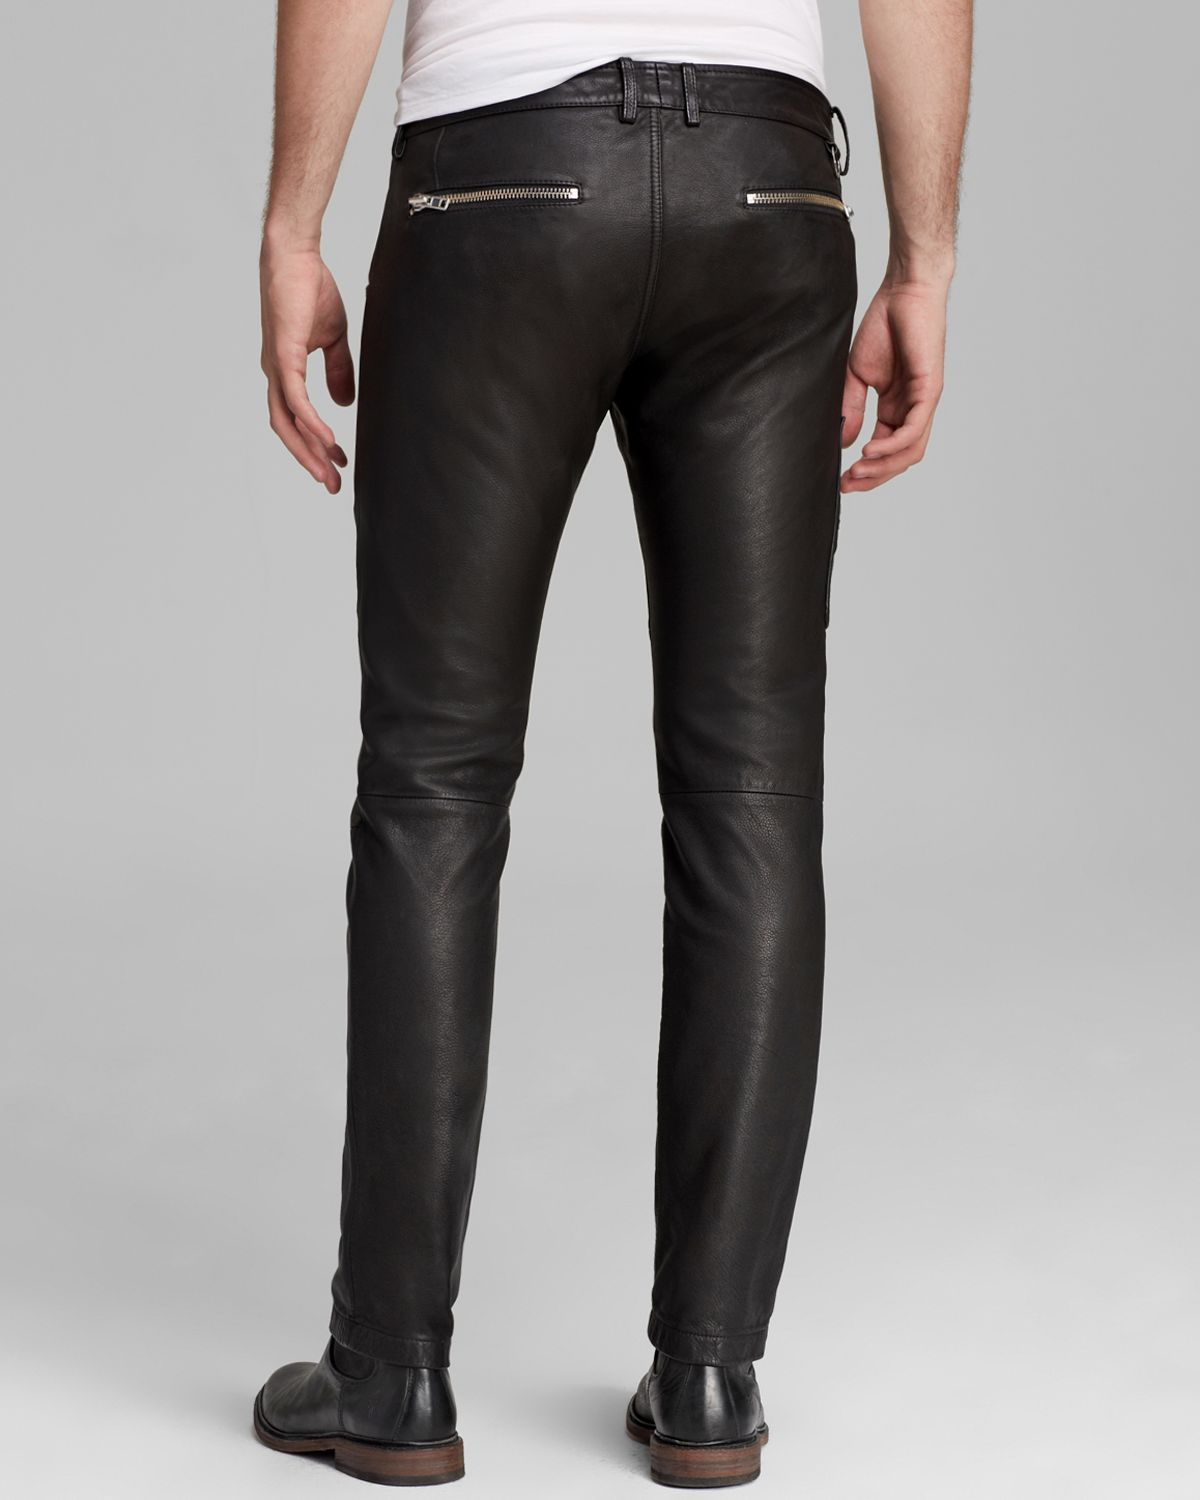 DIESEL Jeans Pzipps Leather Slim Fit in Black for Men - Lyst